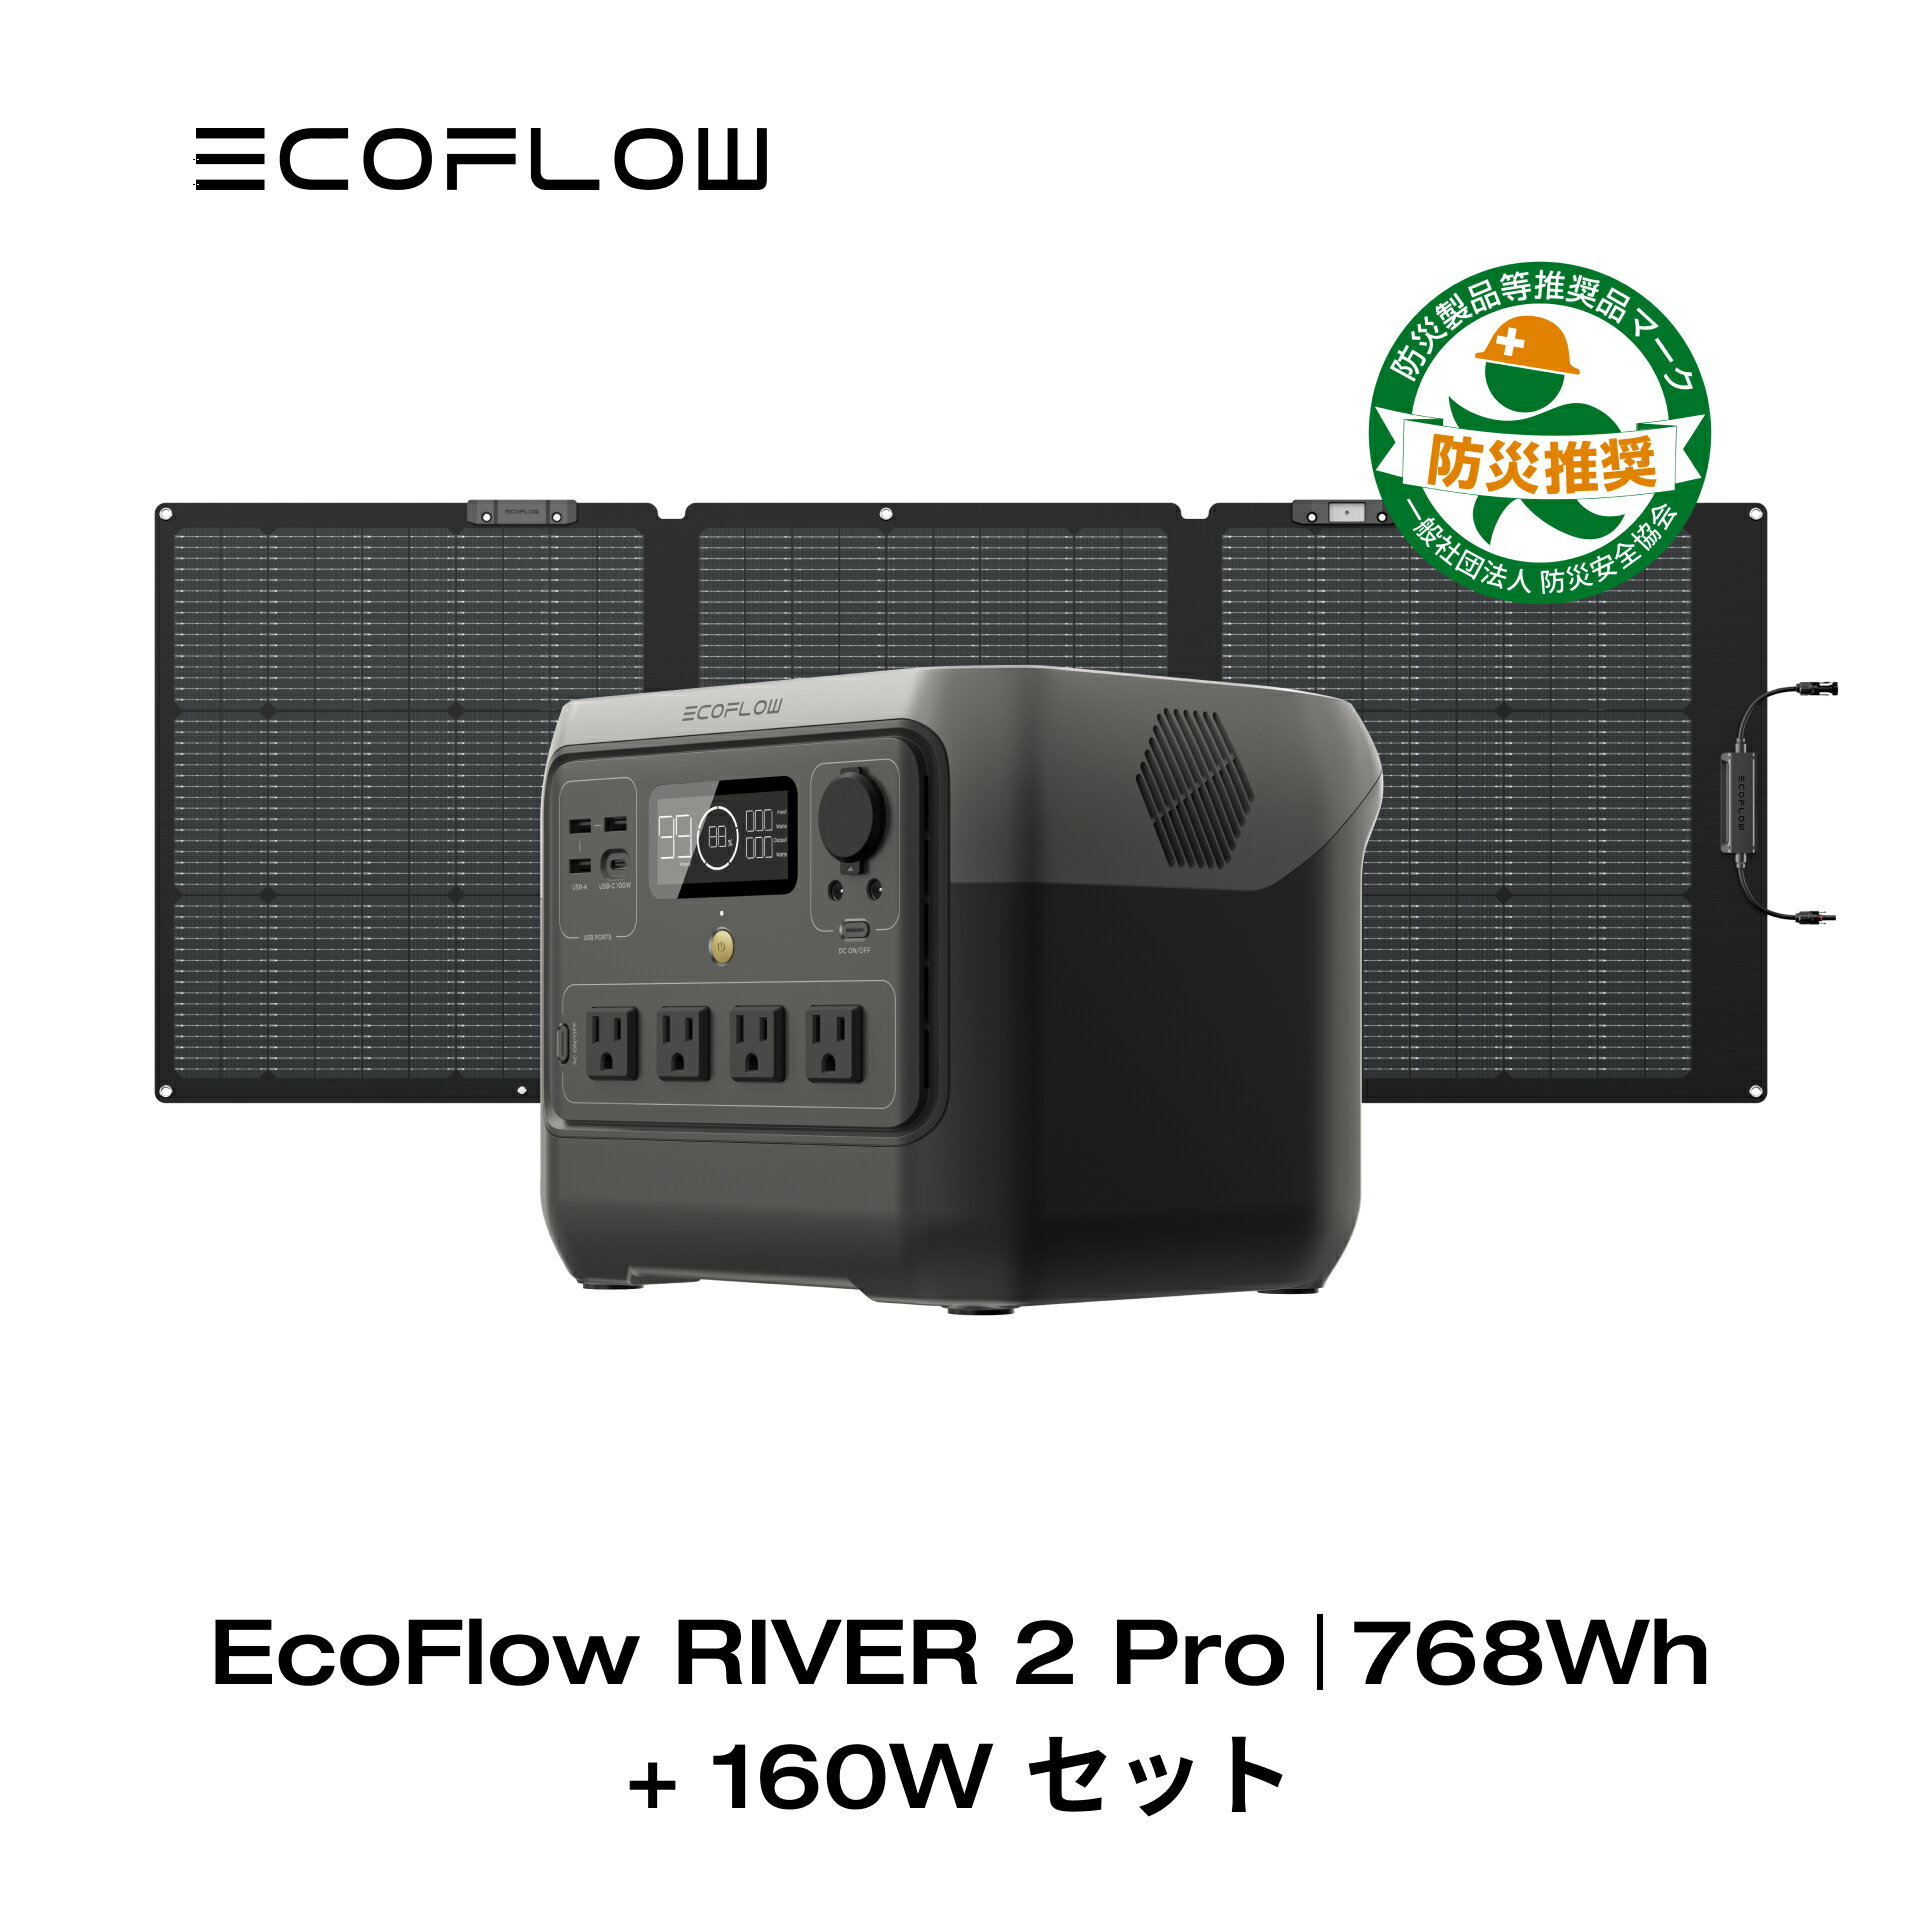 EcoFlow RIVER 2 Pro 768Wh + 160W ポータブル電源 ソーラーパネル セット 蓄電池 発電機 ポータブルバッテリー 急速充電 アプリ対応 車中泊 非常用電源 停電 台風 防災グッズ アウトドア キャ…